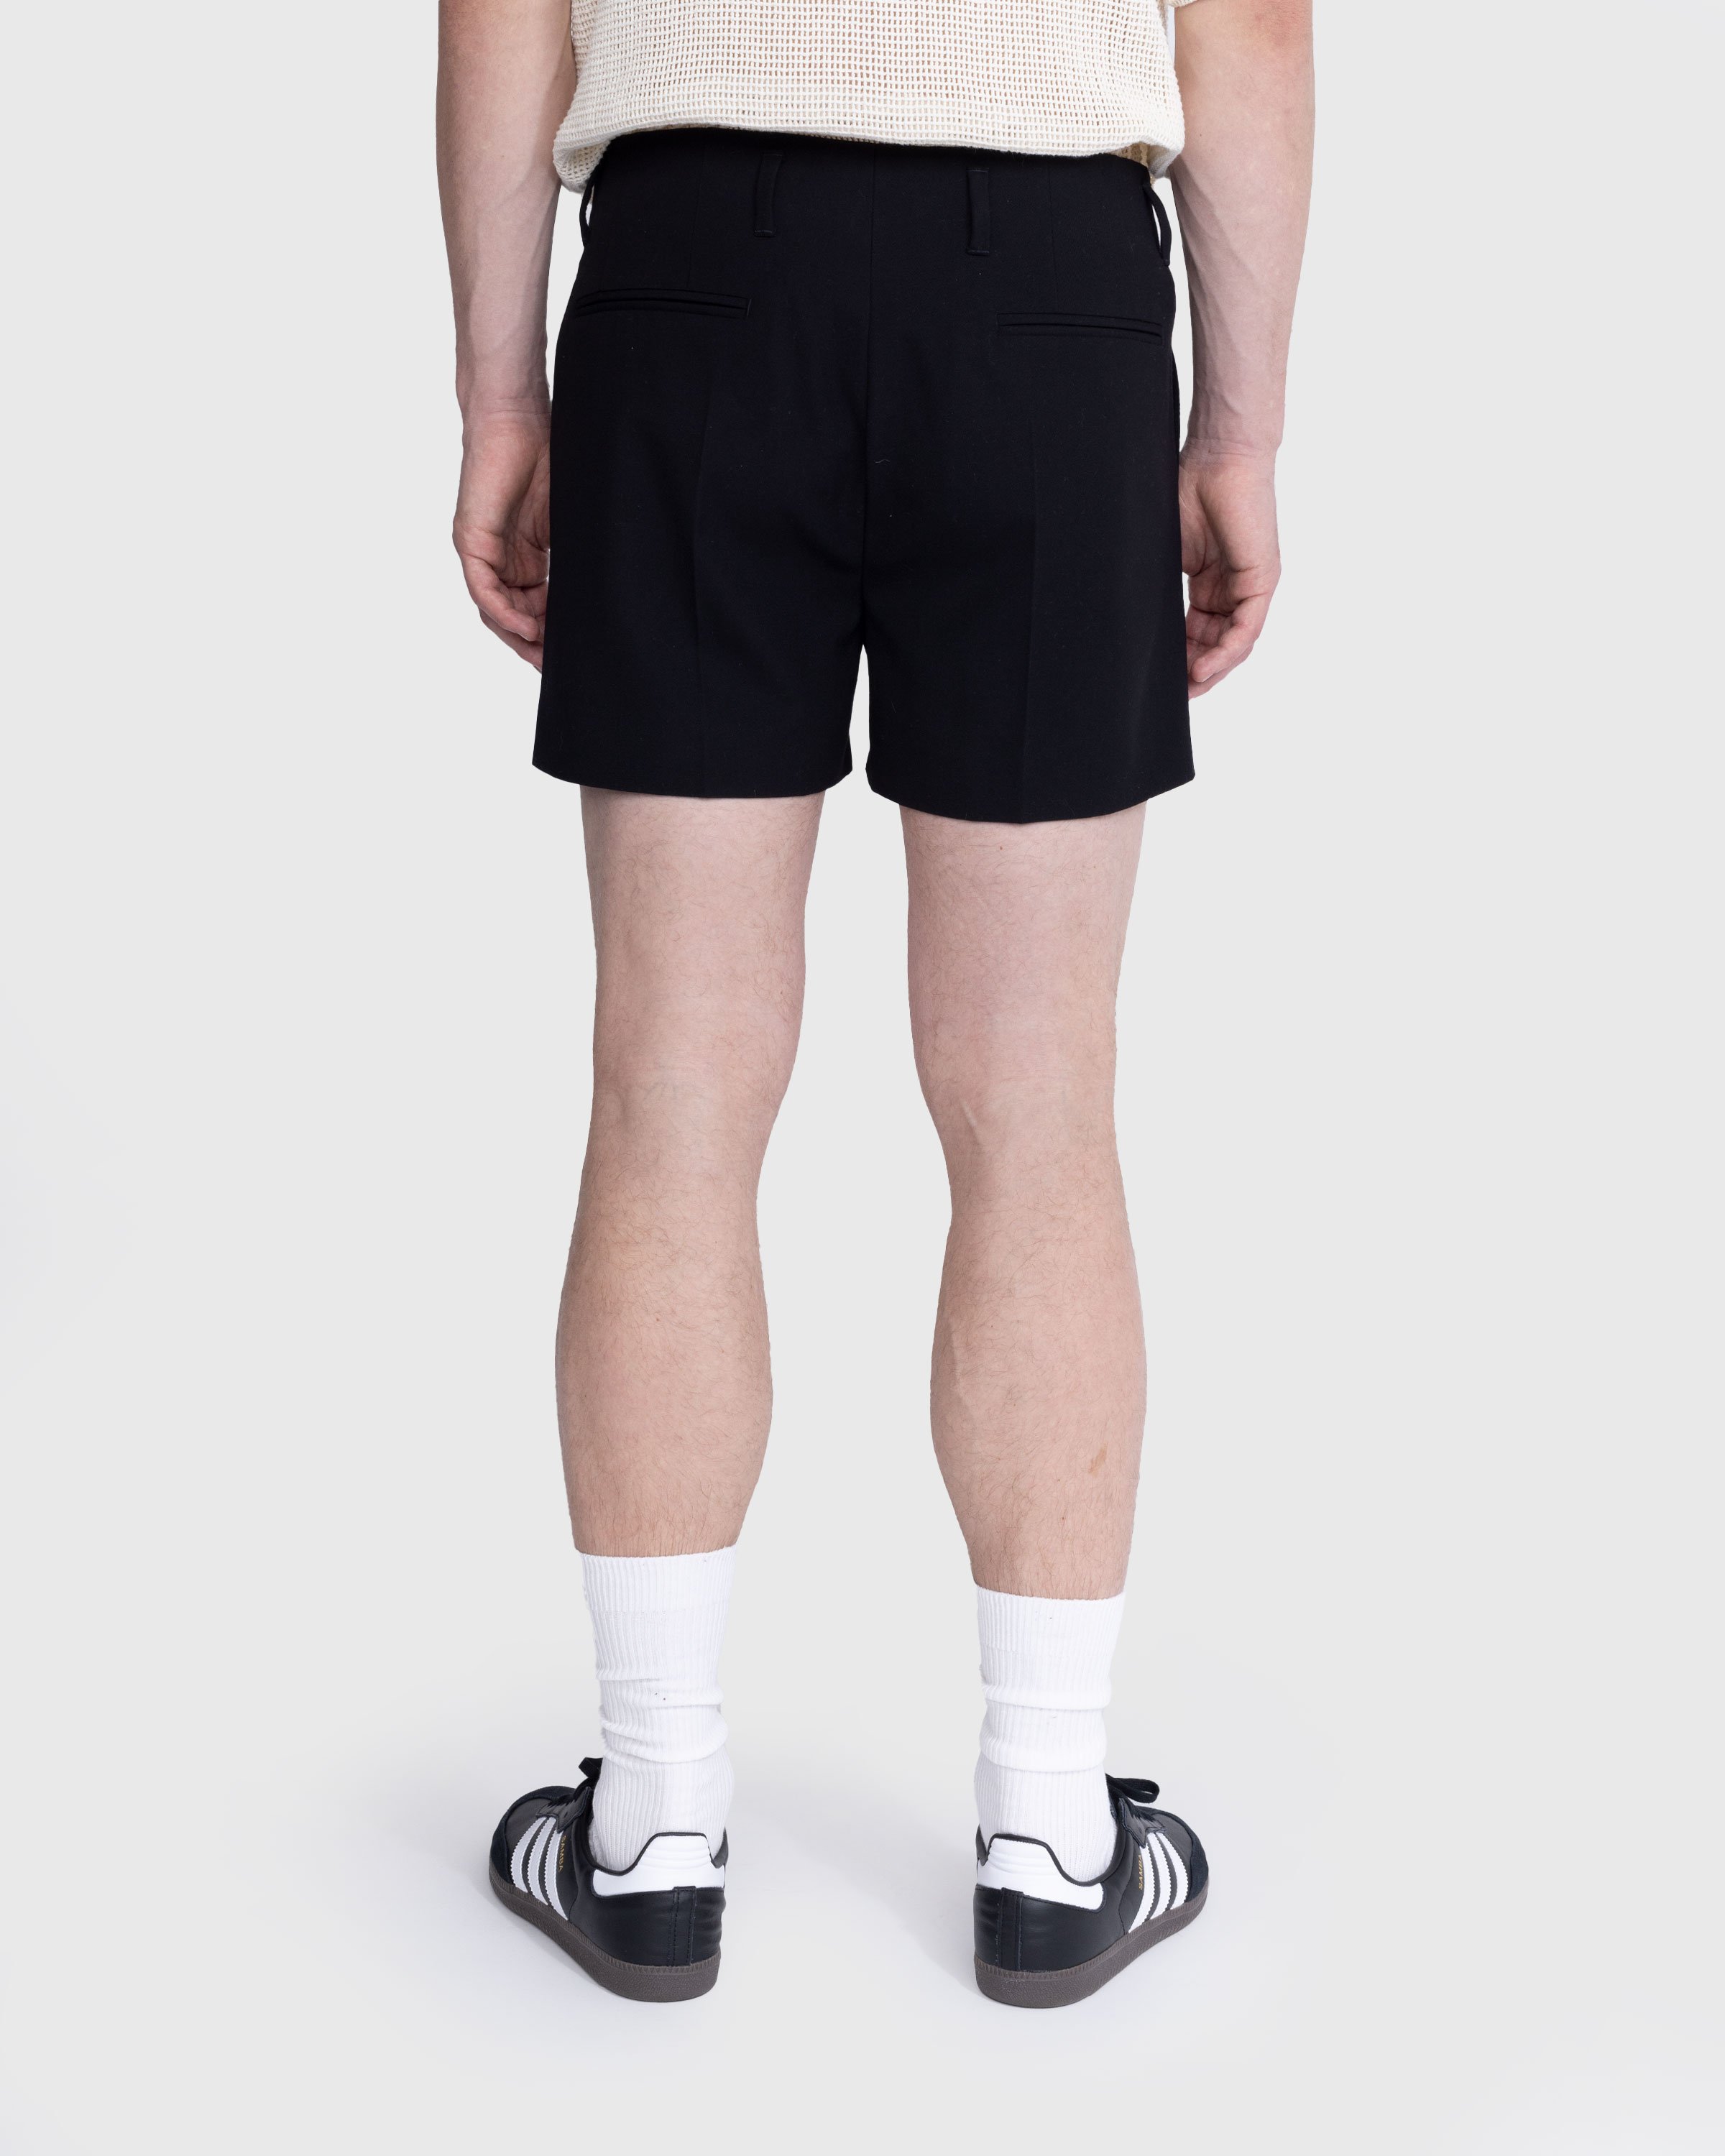 Dries van Noten - Paolo Short Pants Black - Clothing - Black - Image 3